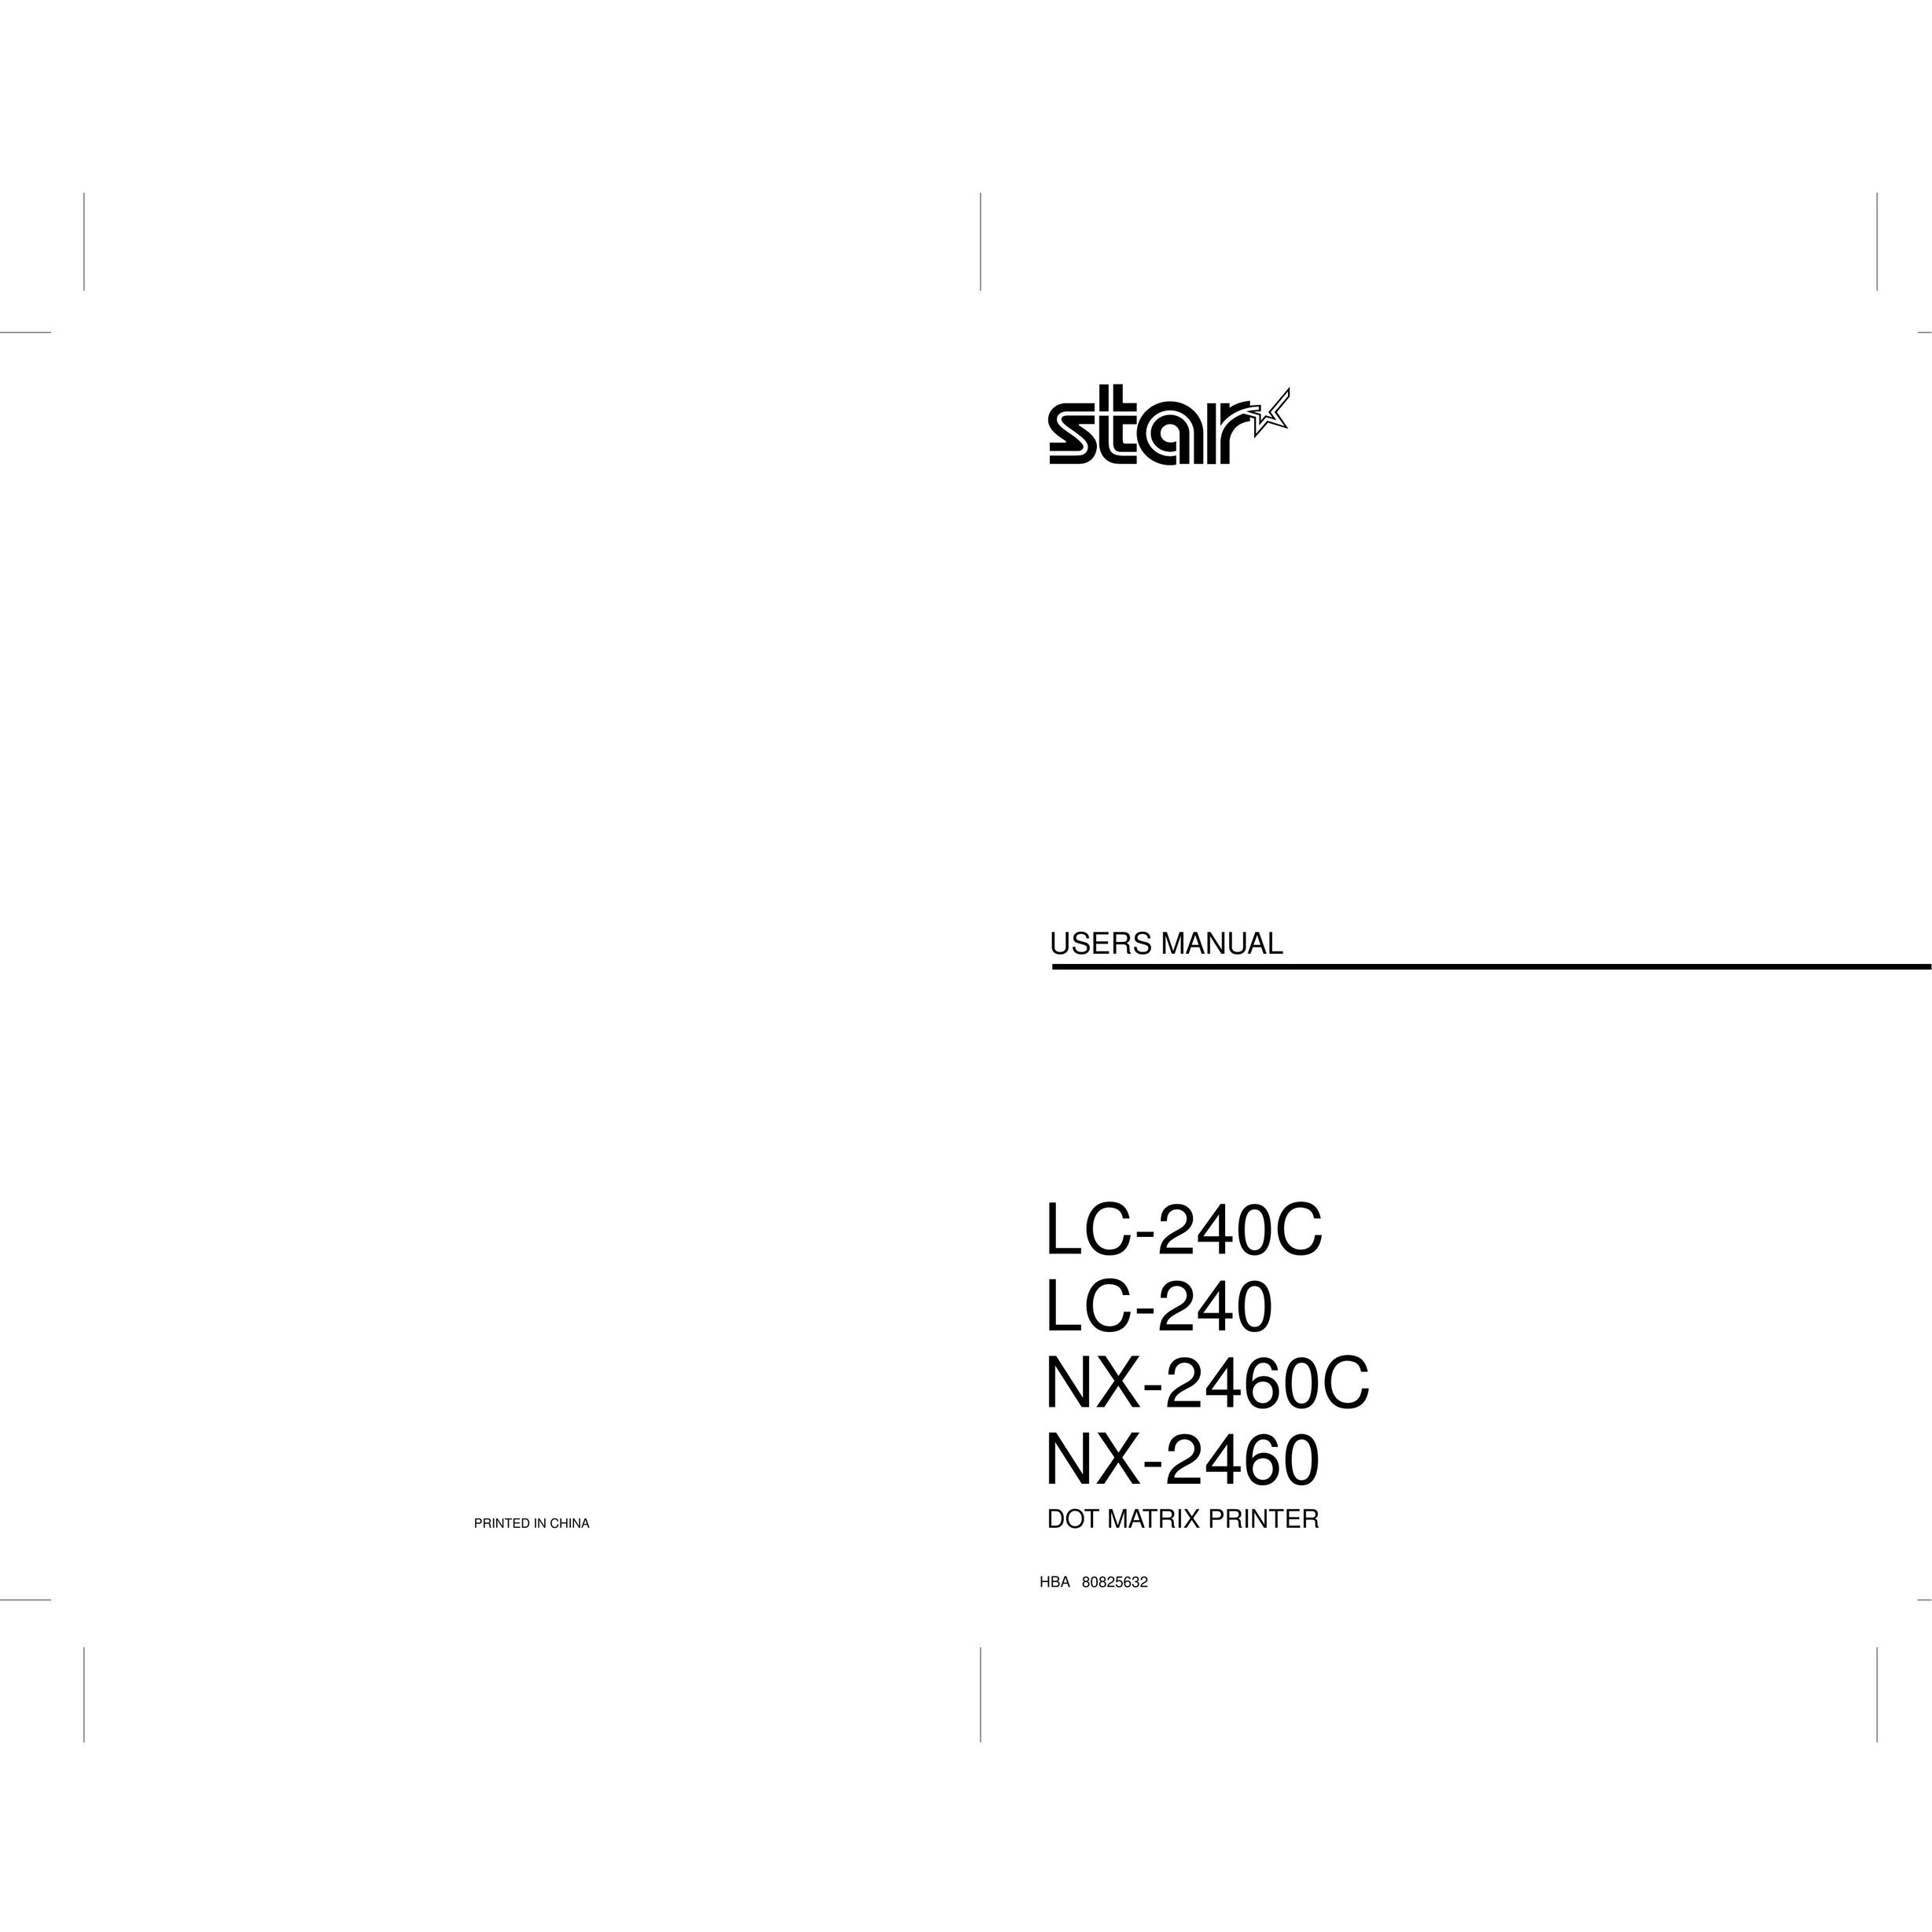 Star Micronics LC-240 Printer User Manual